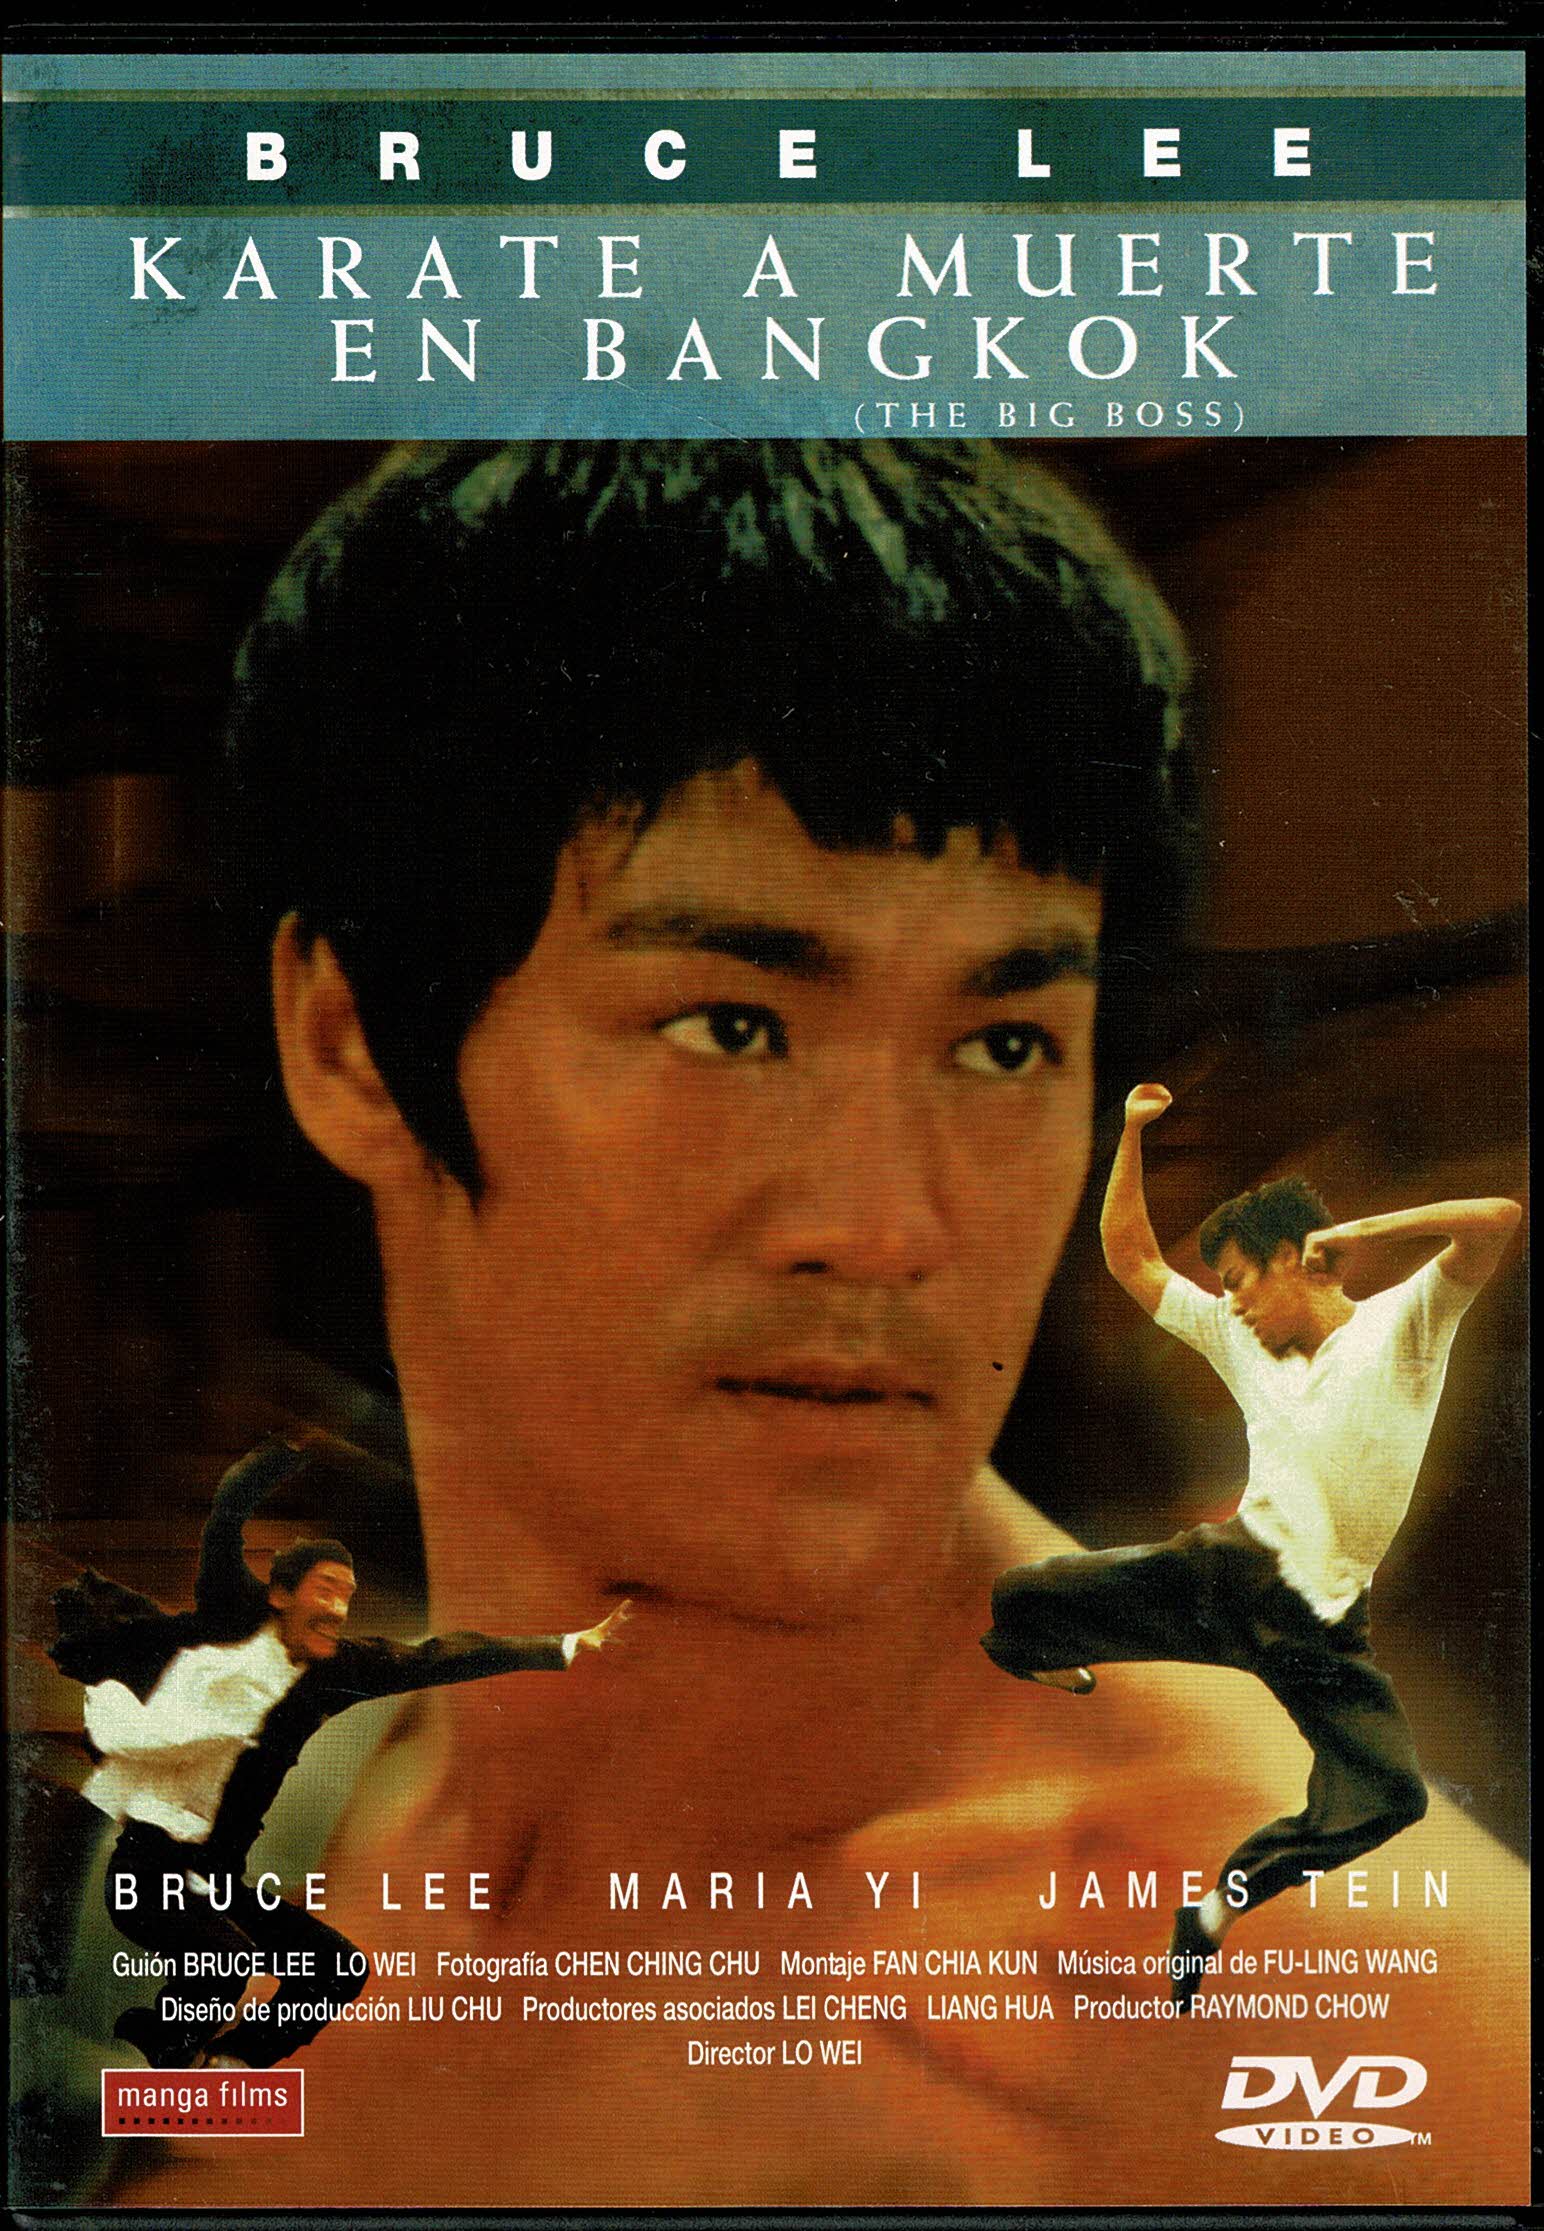 Karate a Muerte en Bangkok (Manga films 1971 )